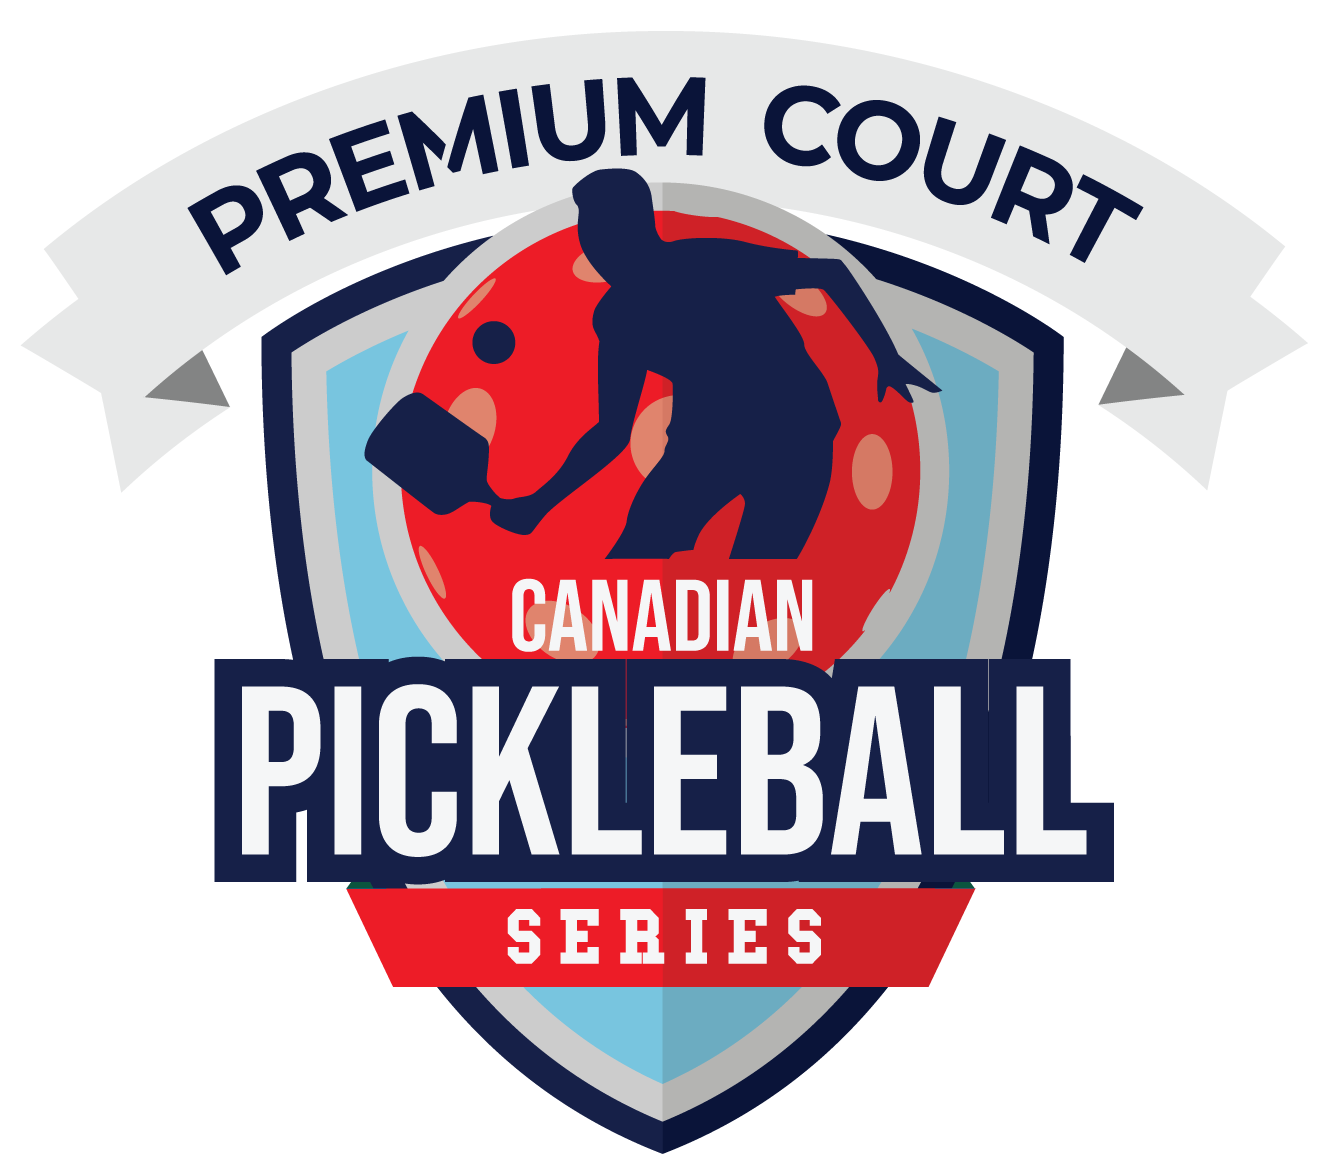 Canadian Pickleball Series